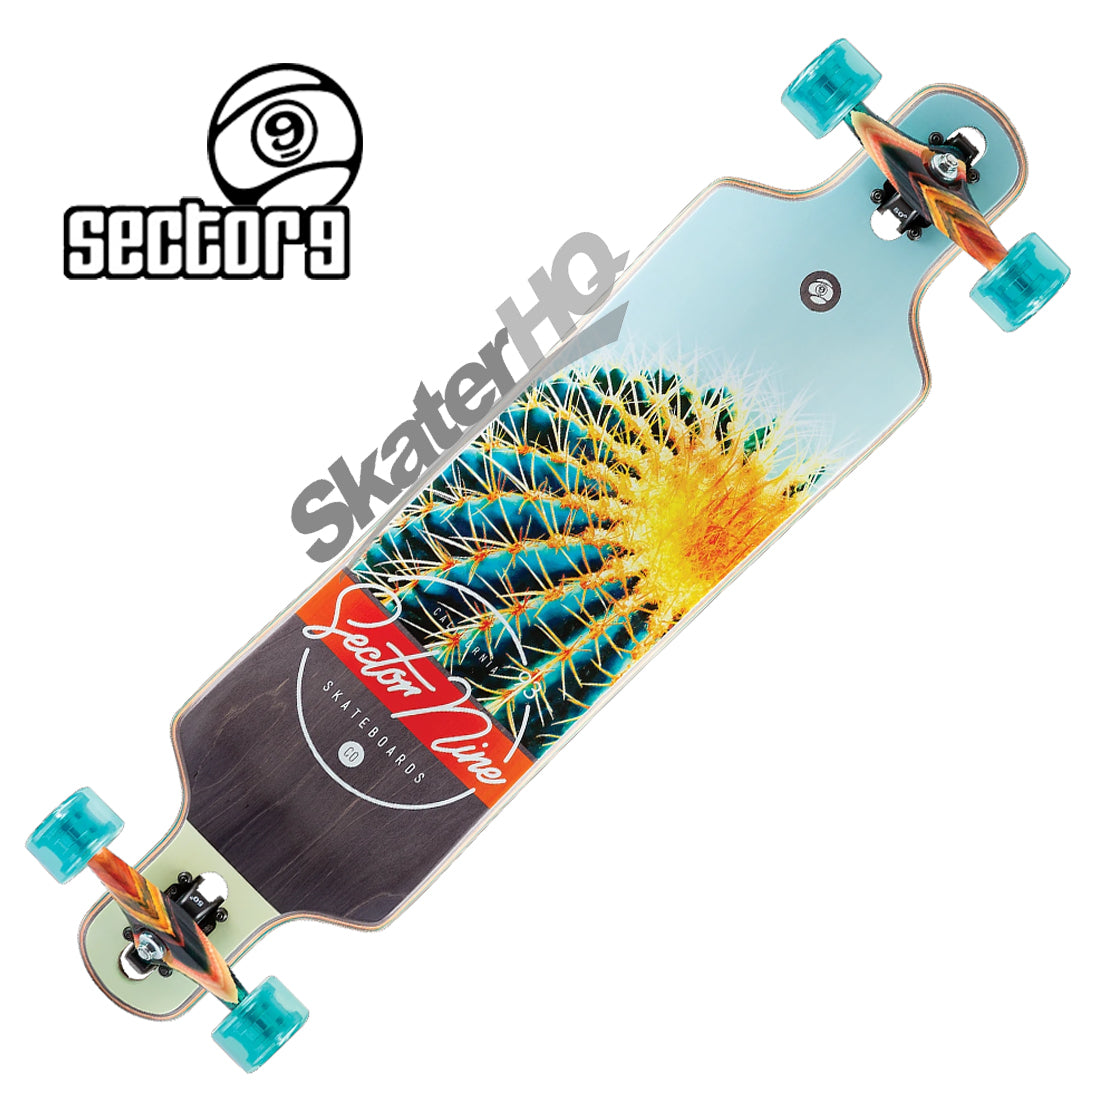 Sector 9 Meridian Desert 40 Complete Skateboard Completes Longboards